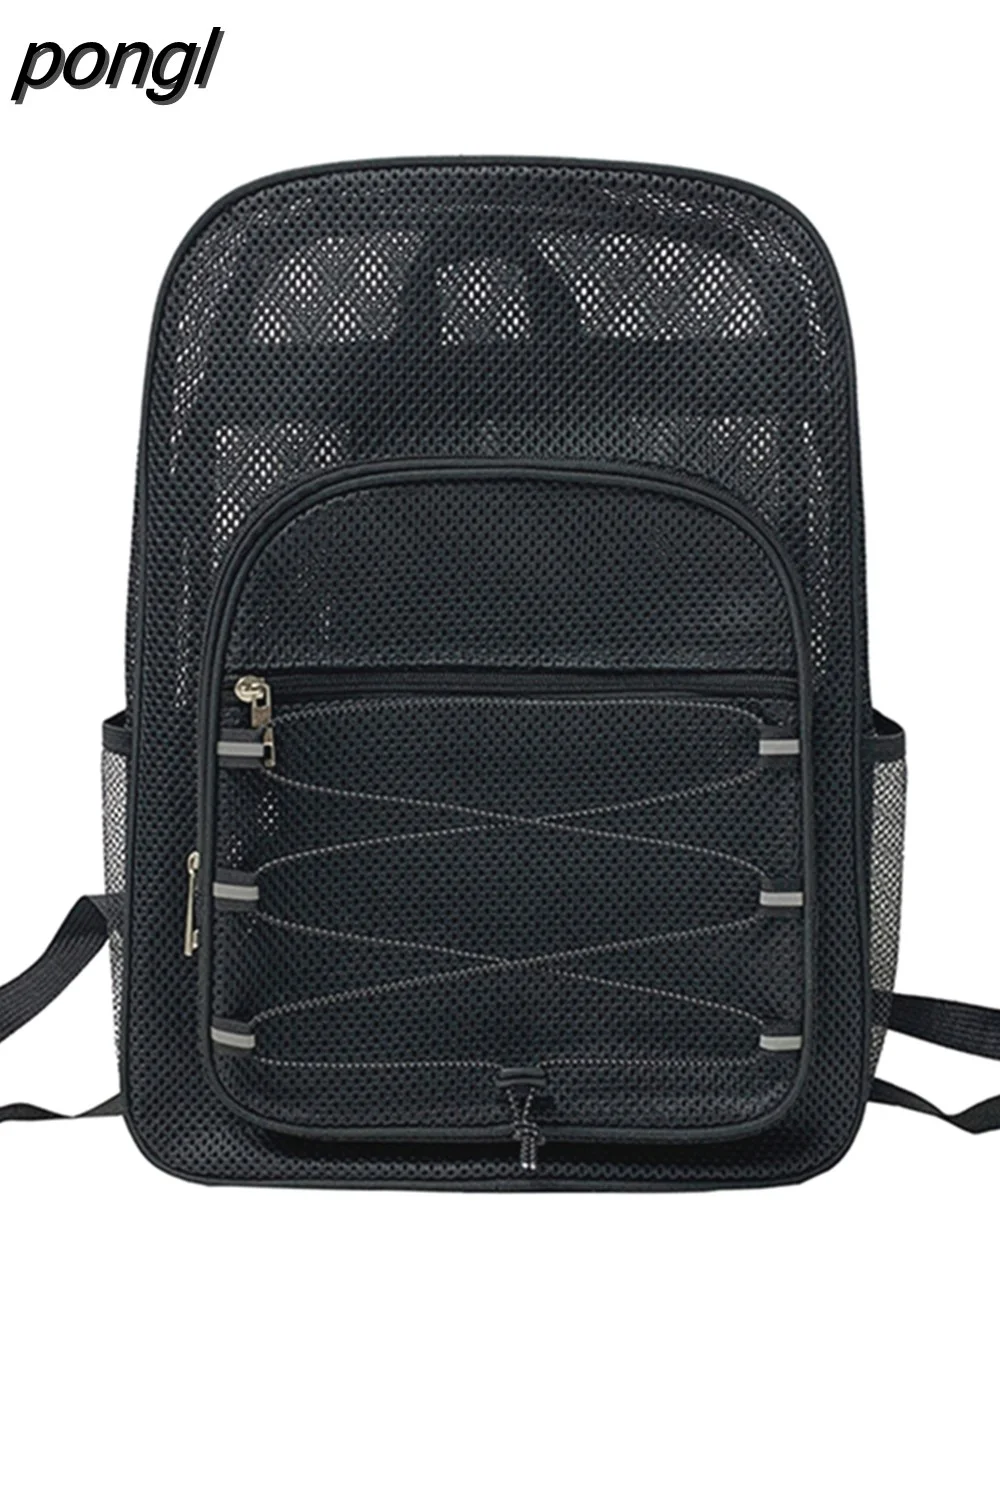 pongl Fashion Women Transparent Backpacks Mesh Backpack for Boys and Girls Light Weight Rucksack Travel Gym Bags Black Student Bag